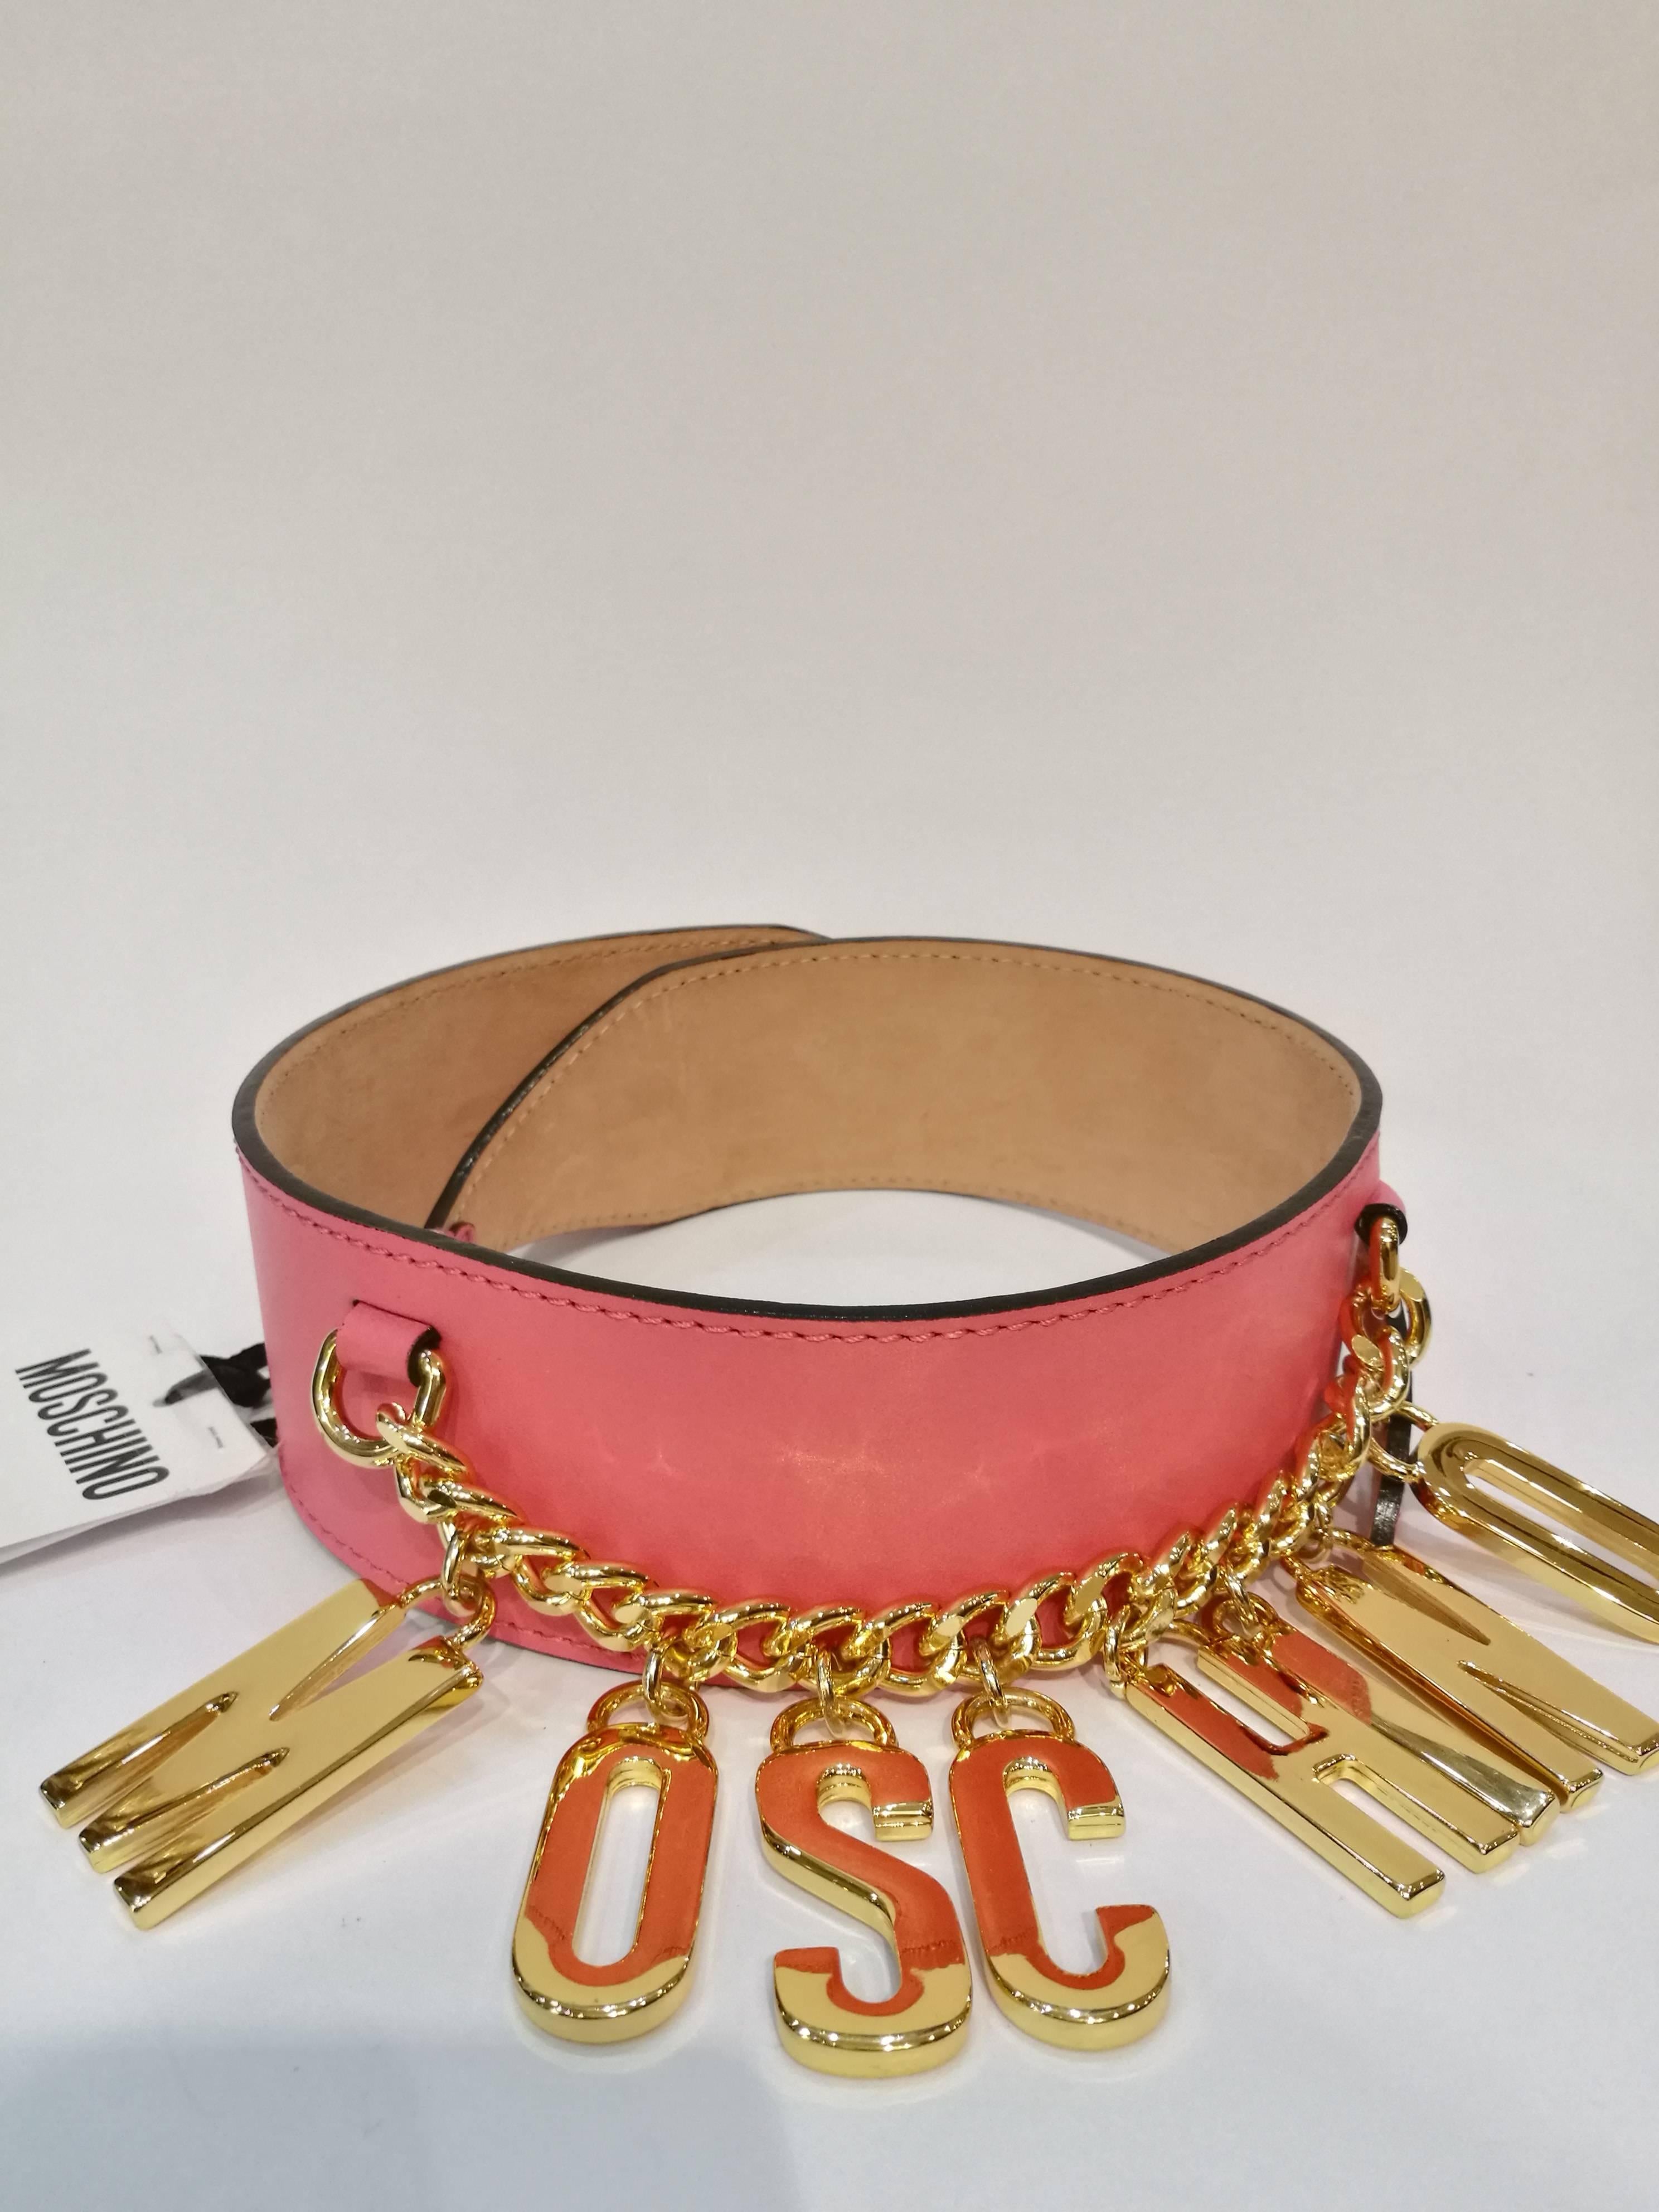 Moschino Pink Belt NWOT
Pink leather belt with gold tone Moschino logo
Italian size range 38